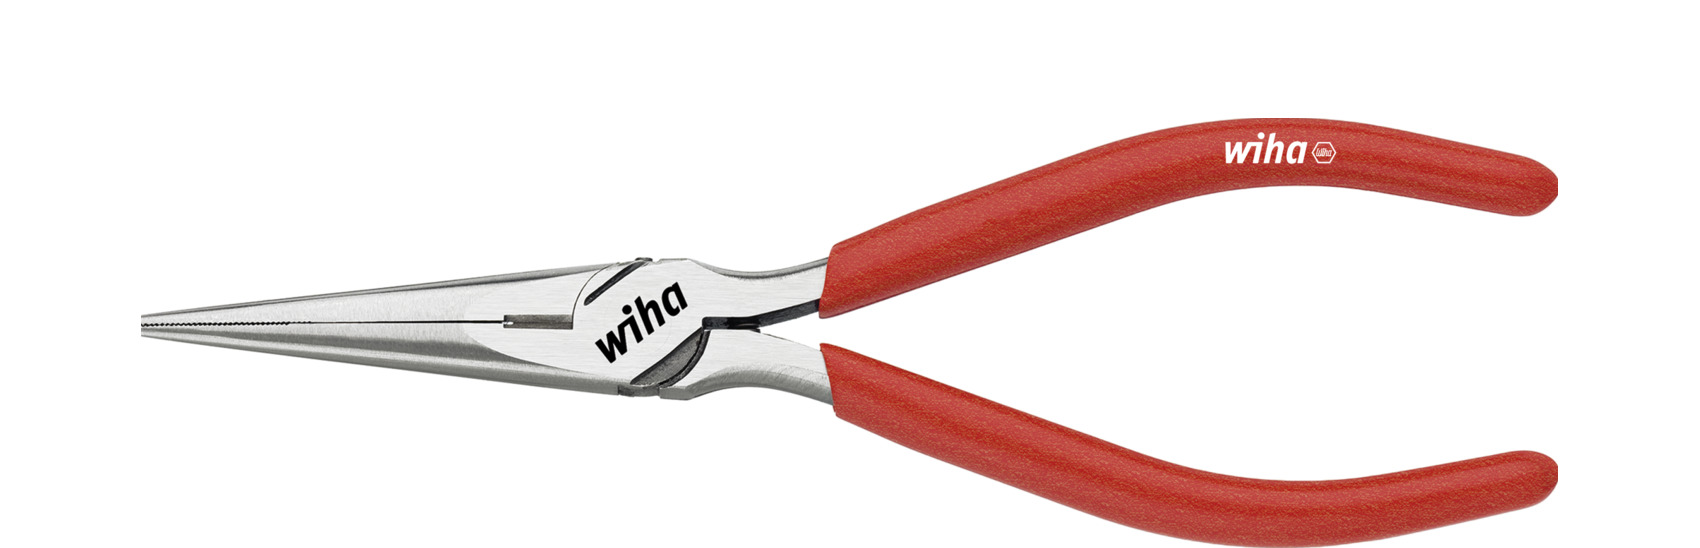 Buy Wiha Classic precision mechanic's needle nose pliers with